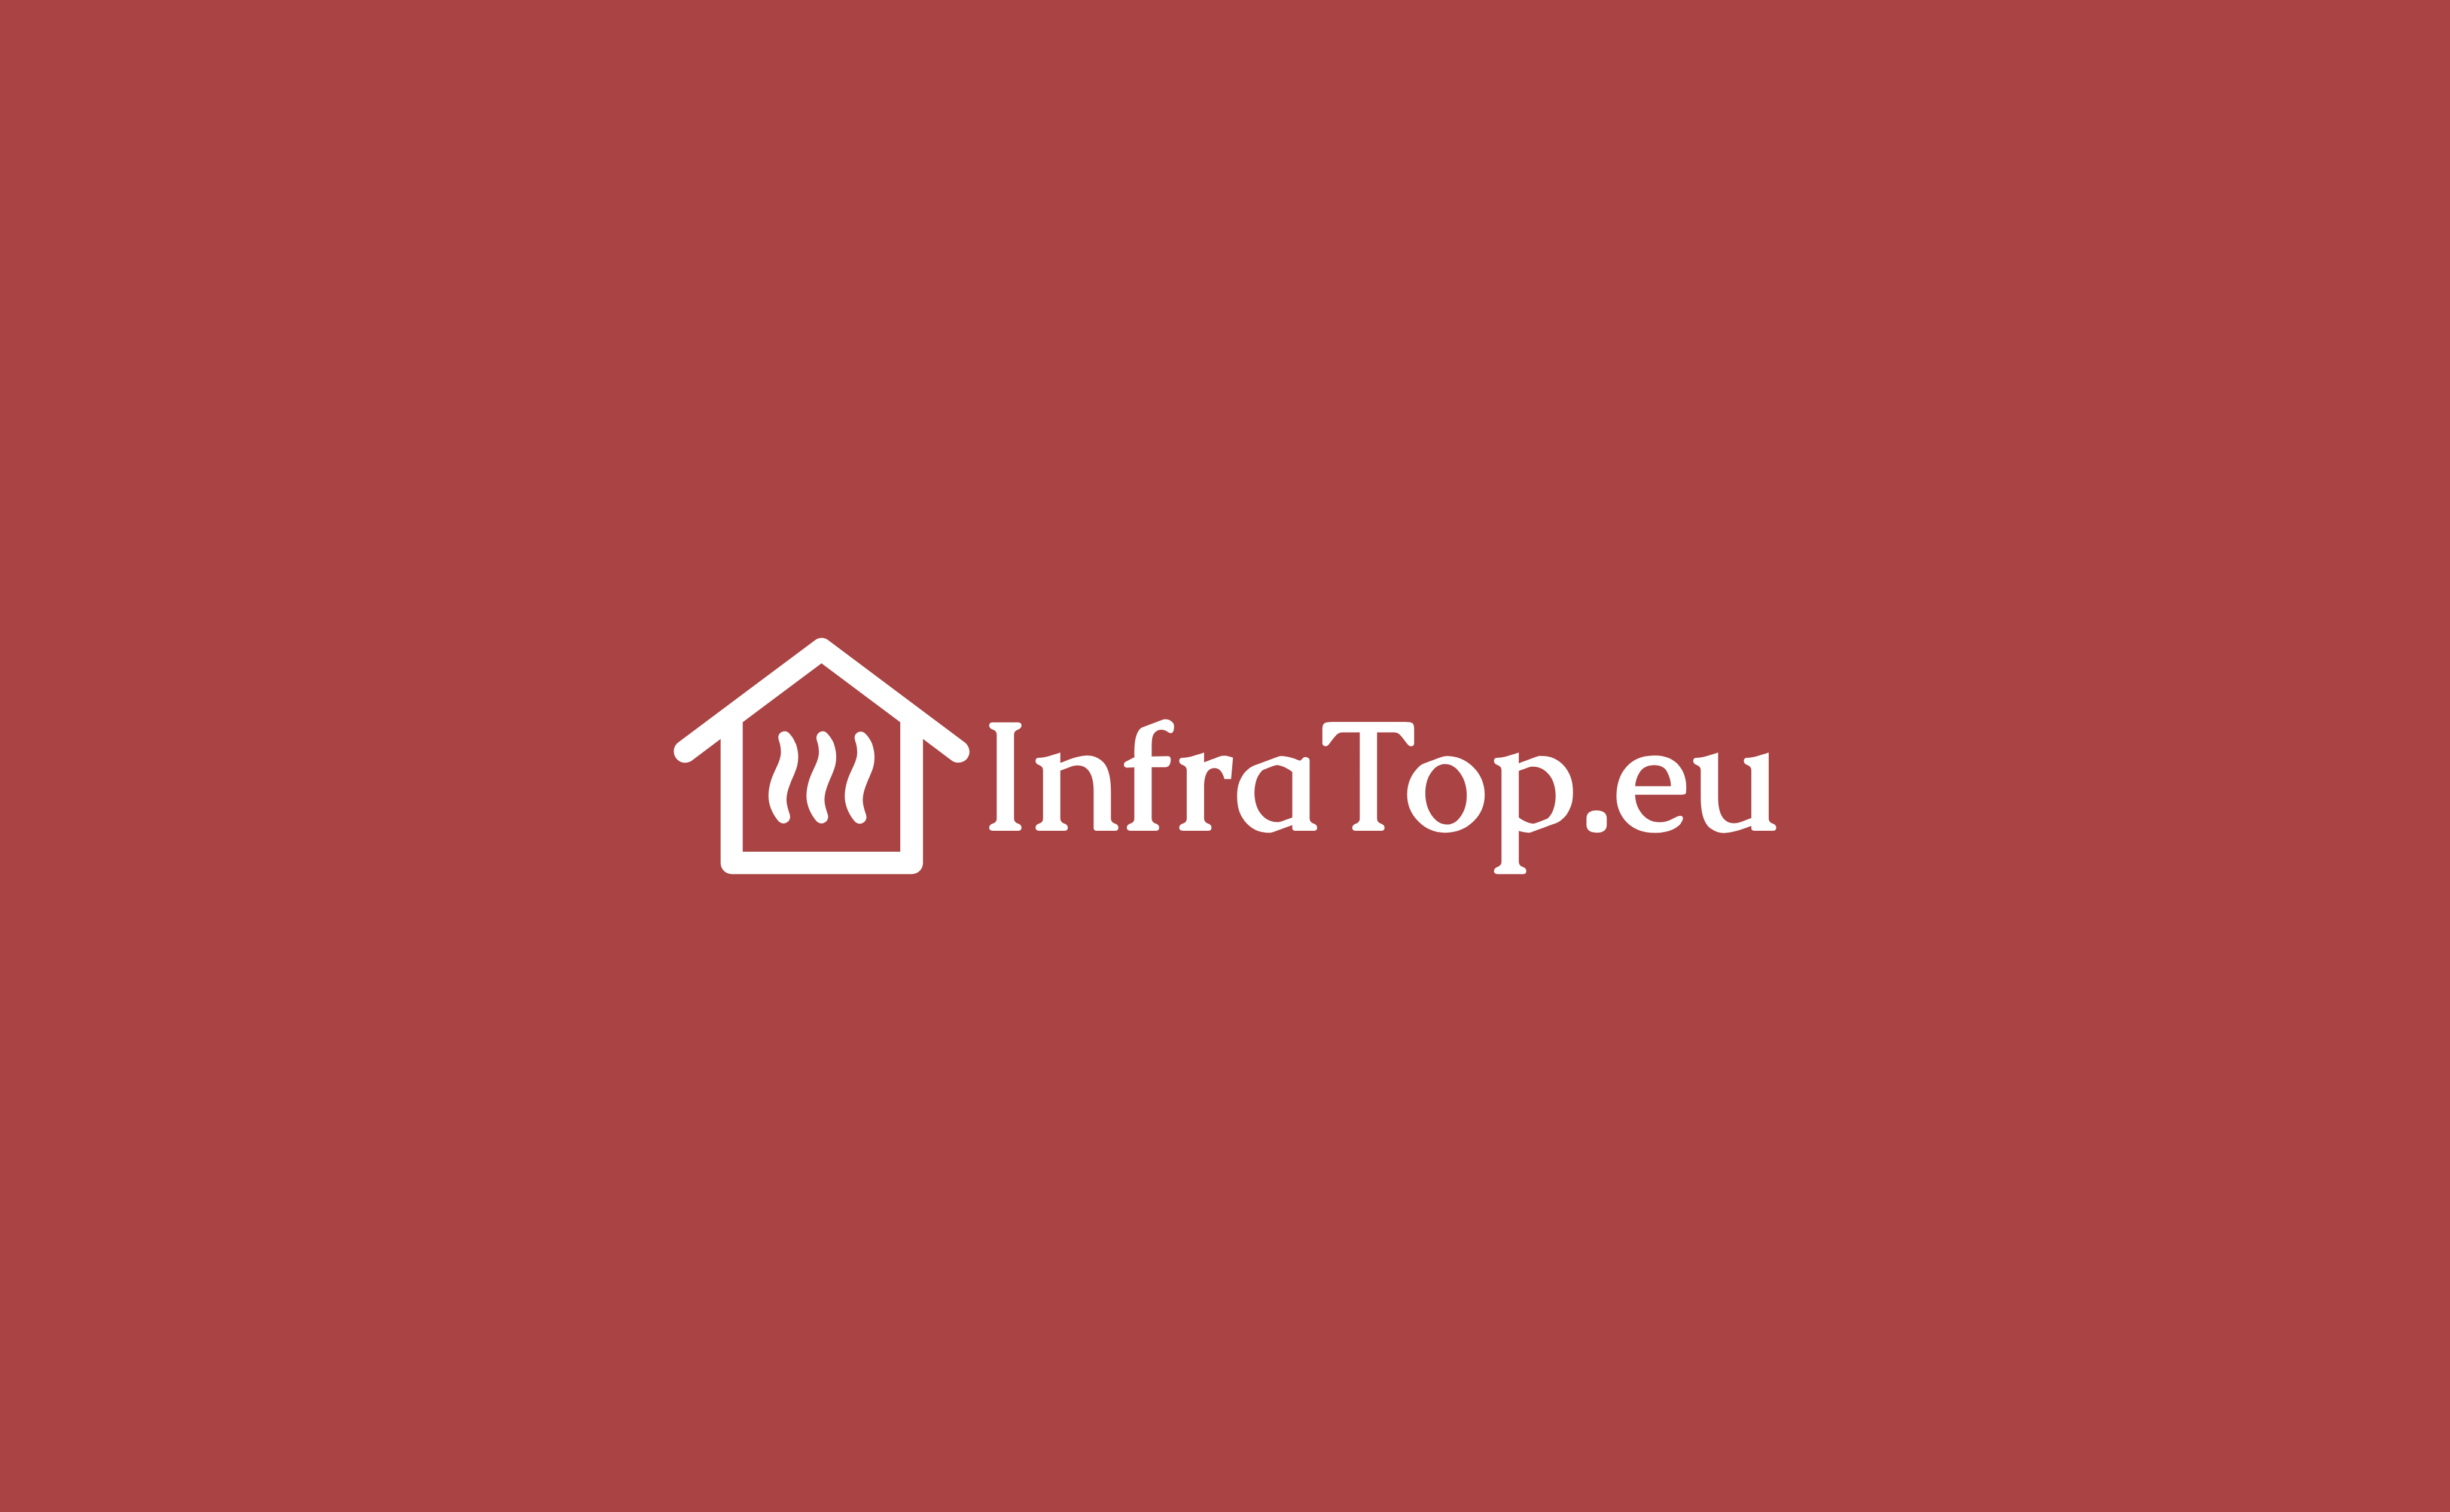 www.infratop.eu